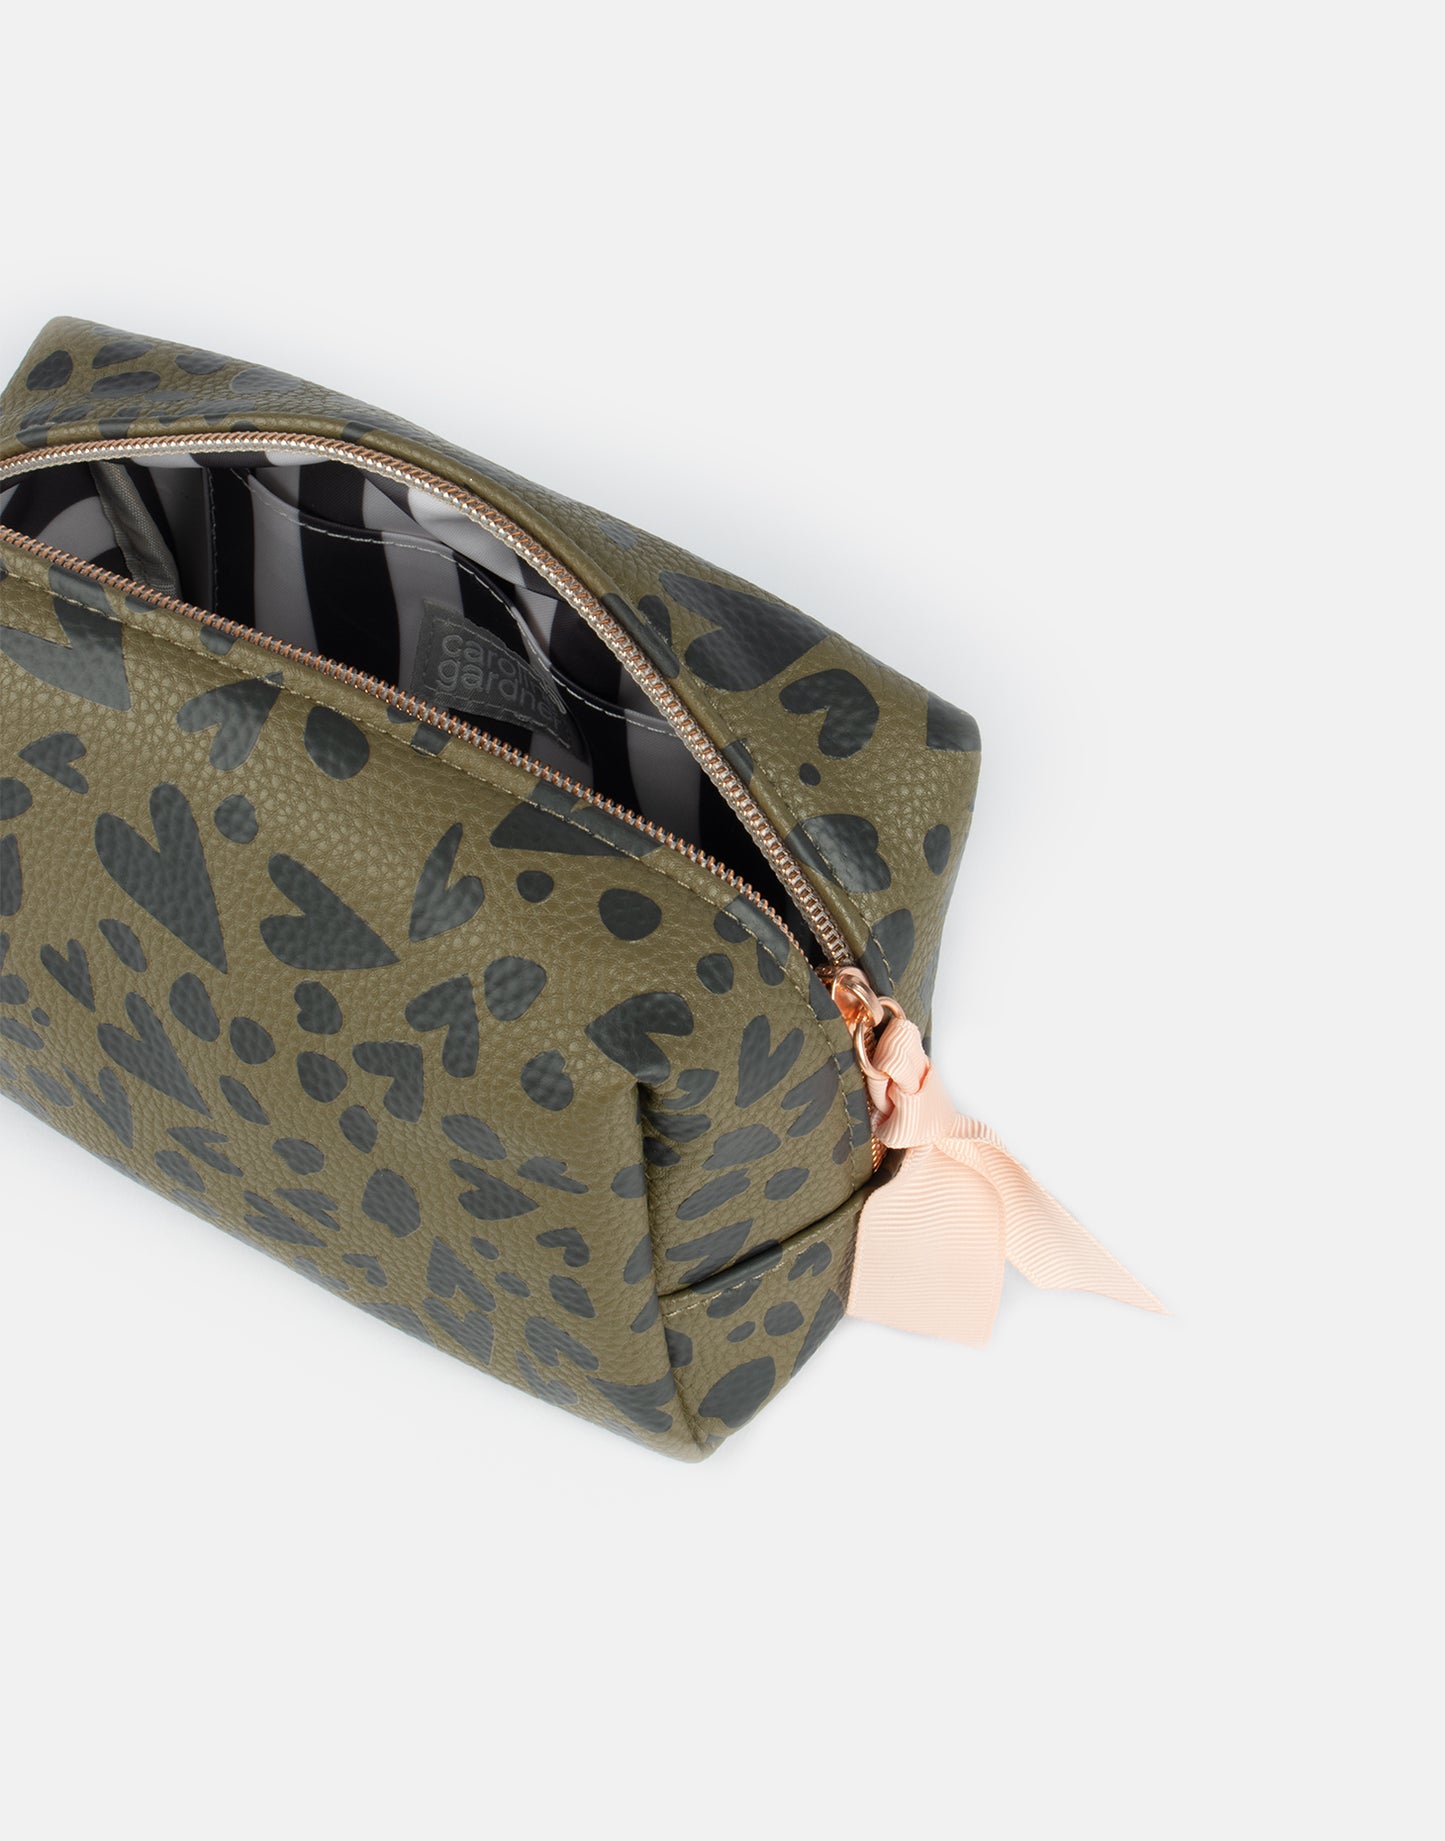 Cube Cosmetic Bag – Khaki and Black Hearts